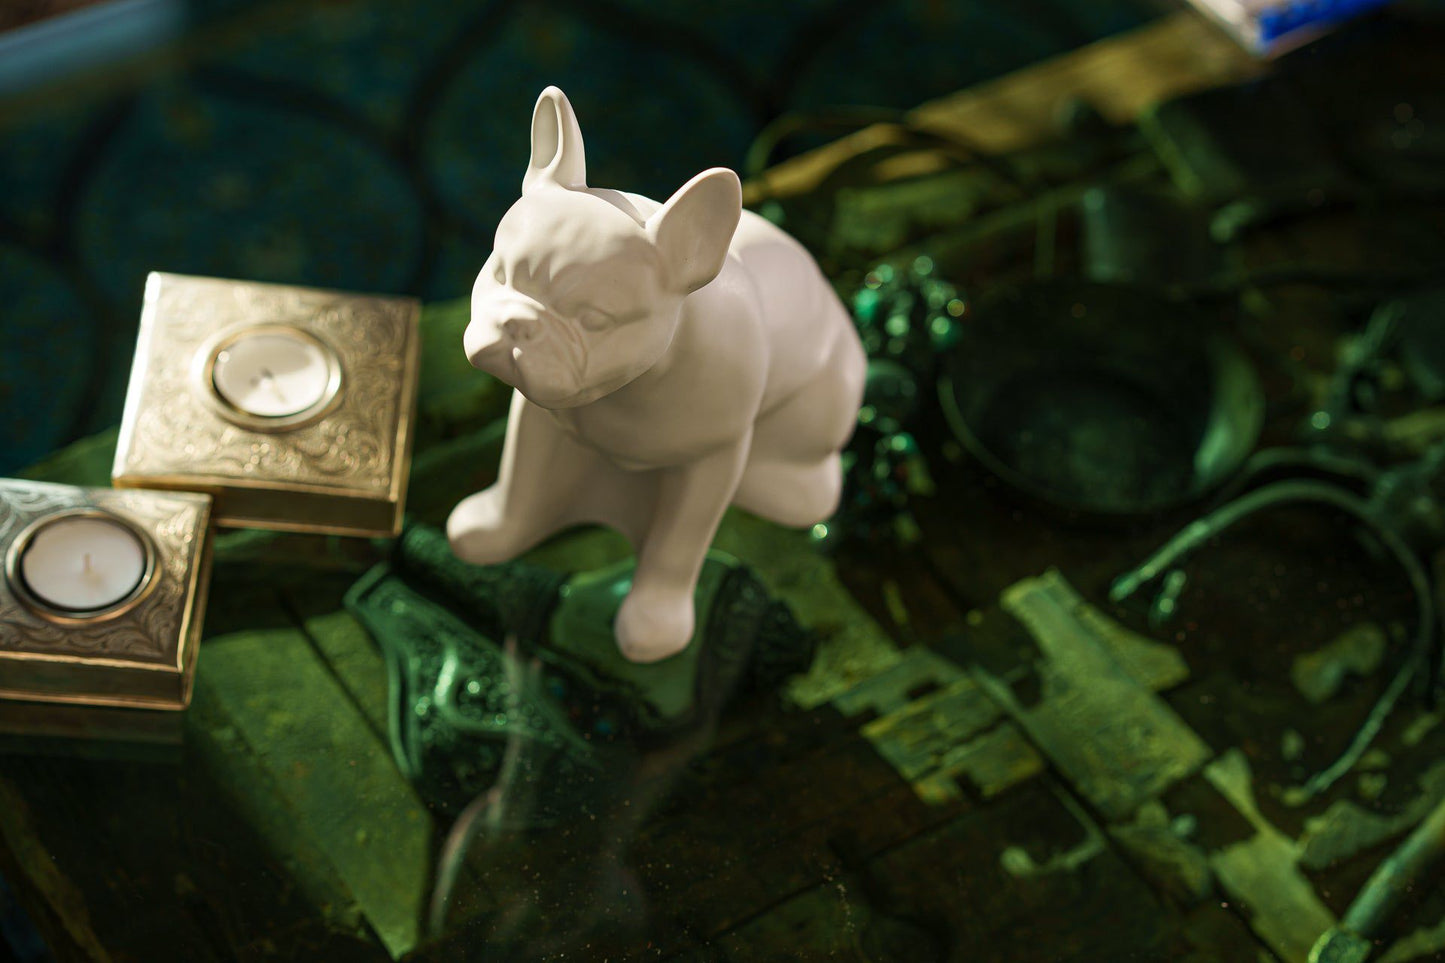 
                  
                    Pulvis Art Urns Pet Urn French Bulldog Pet Urn - Transparent | Ceramic Urn
                  
                